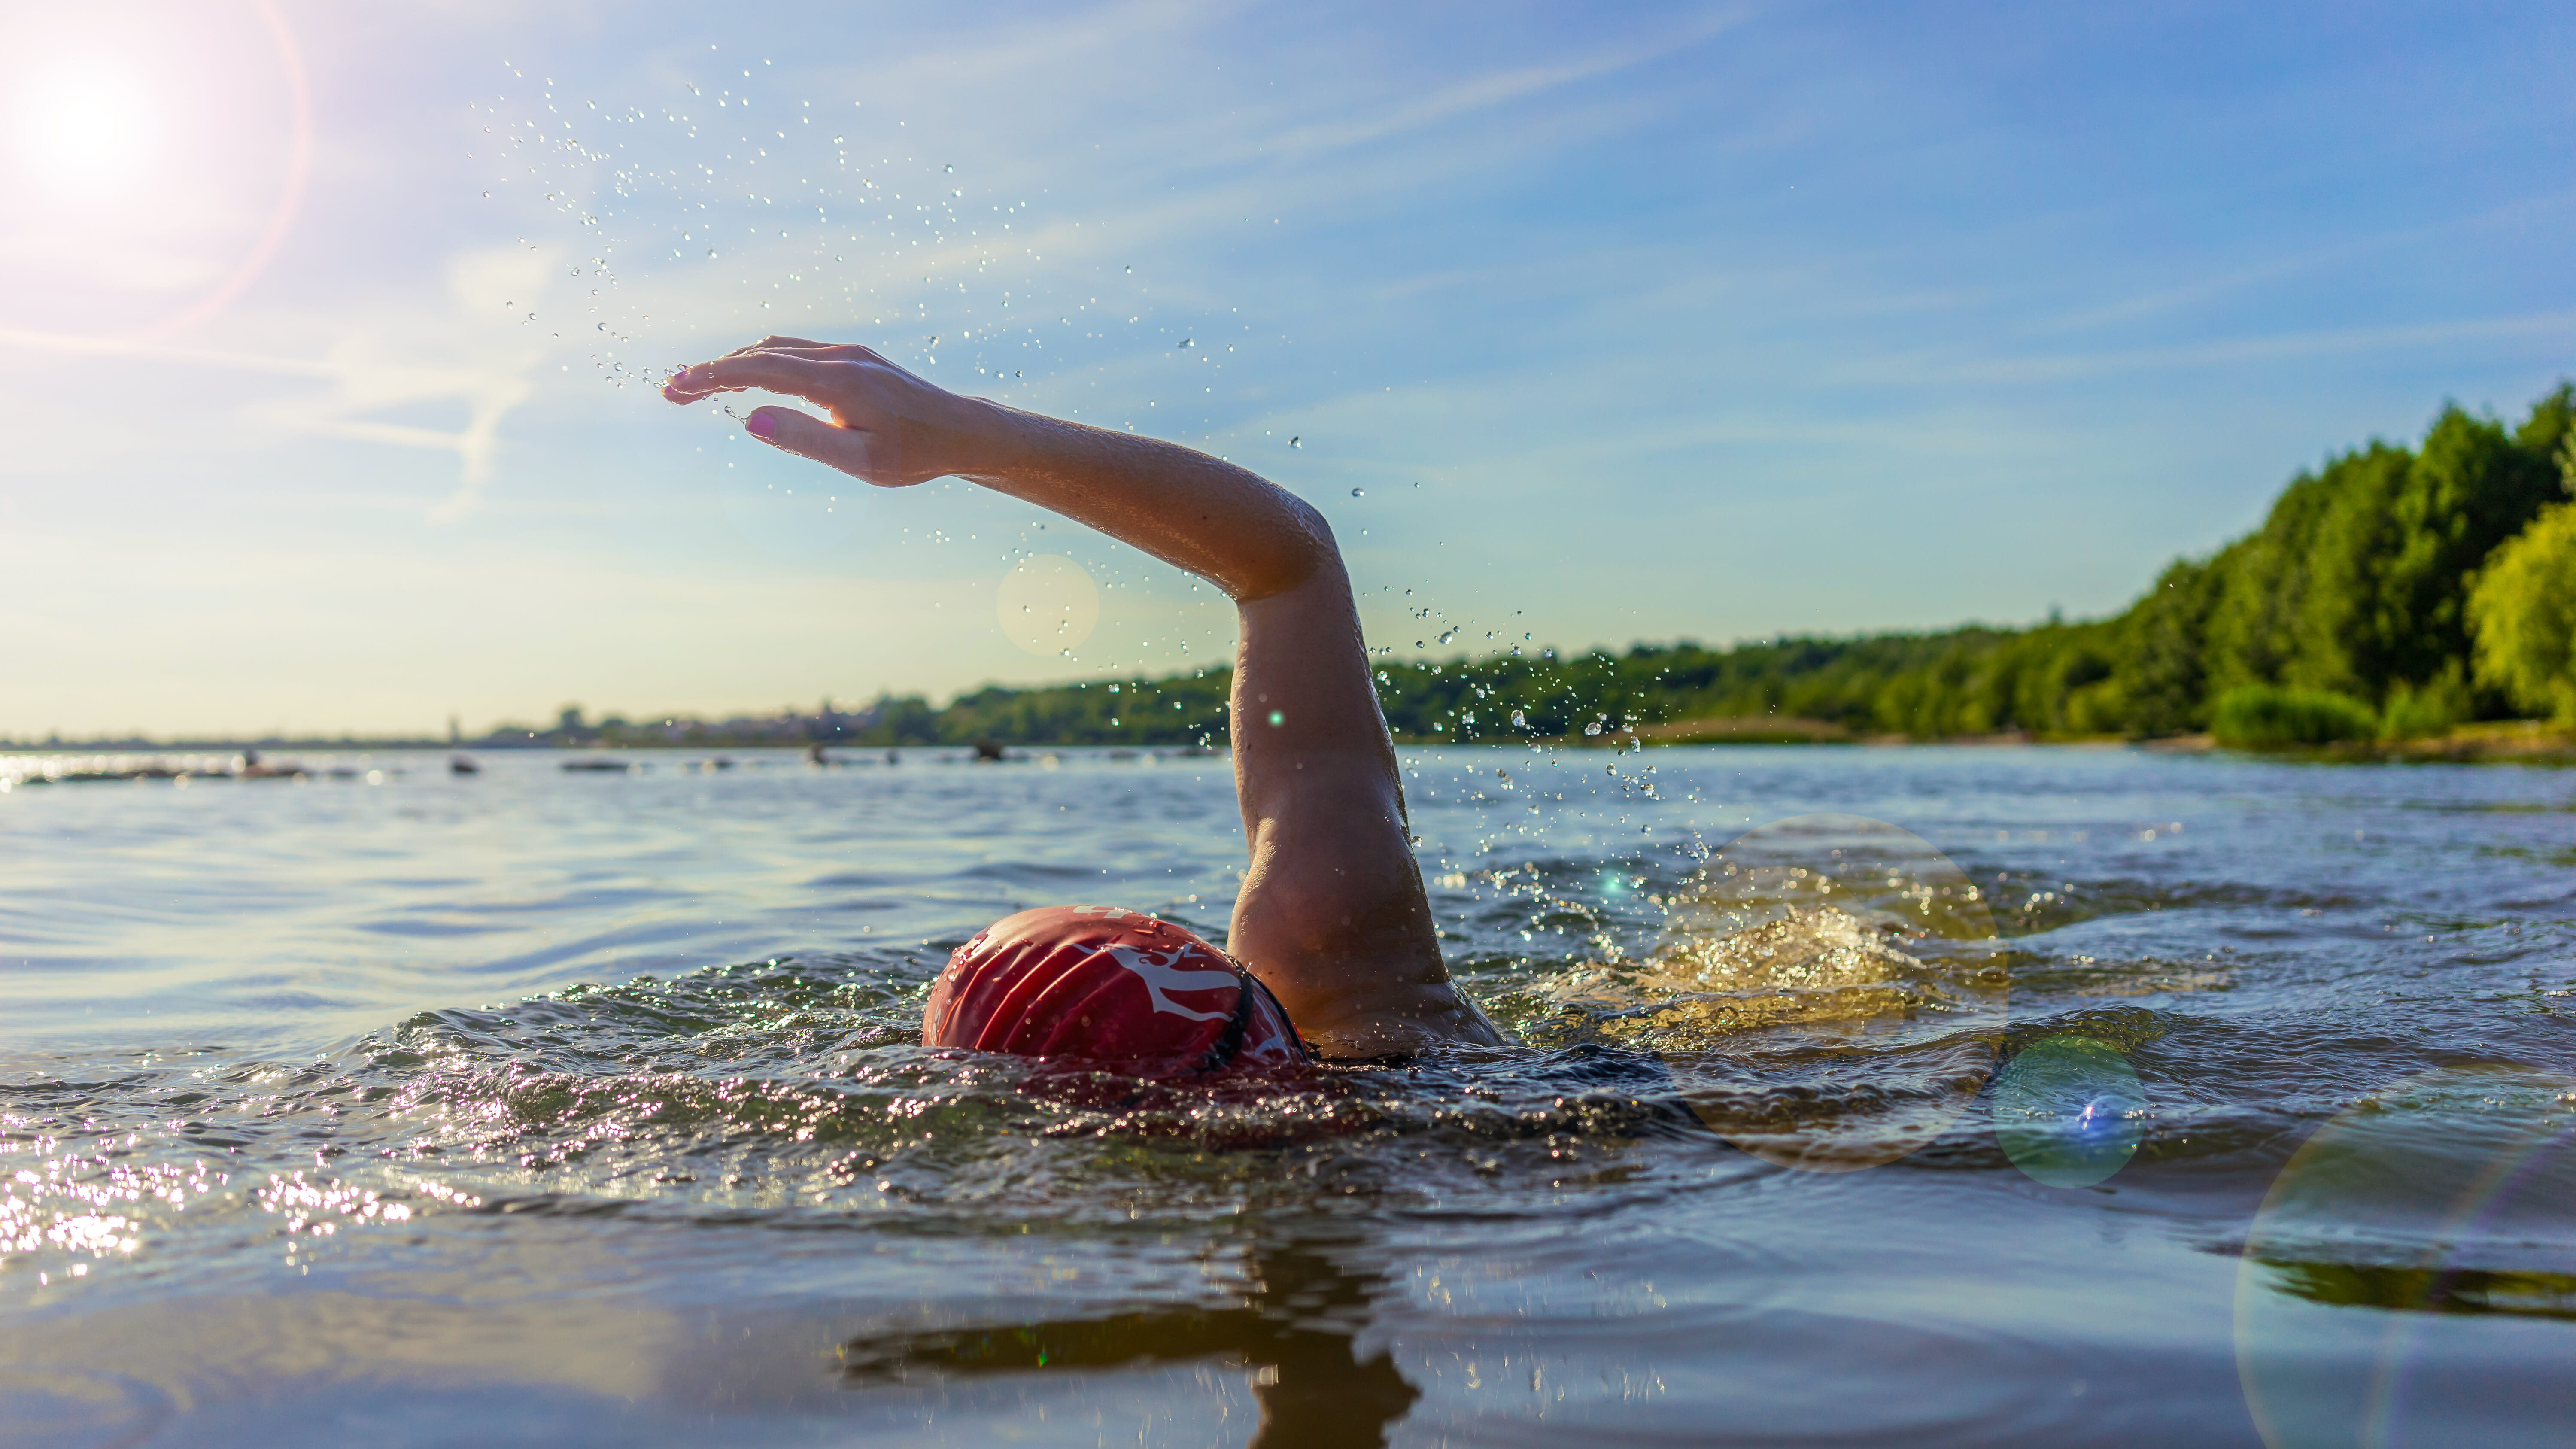 Open water swimming has amazing benefits